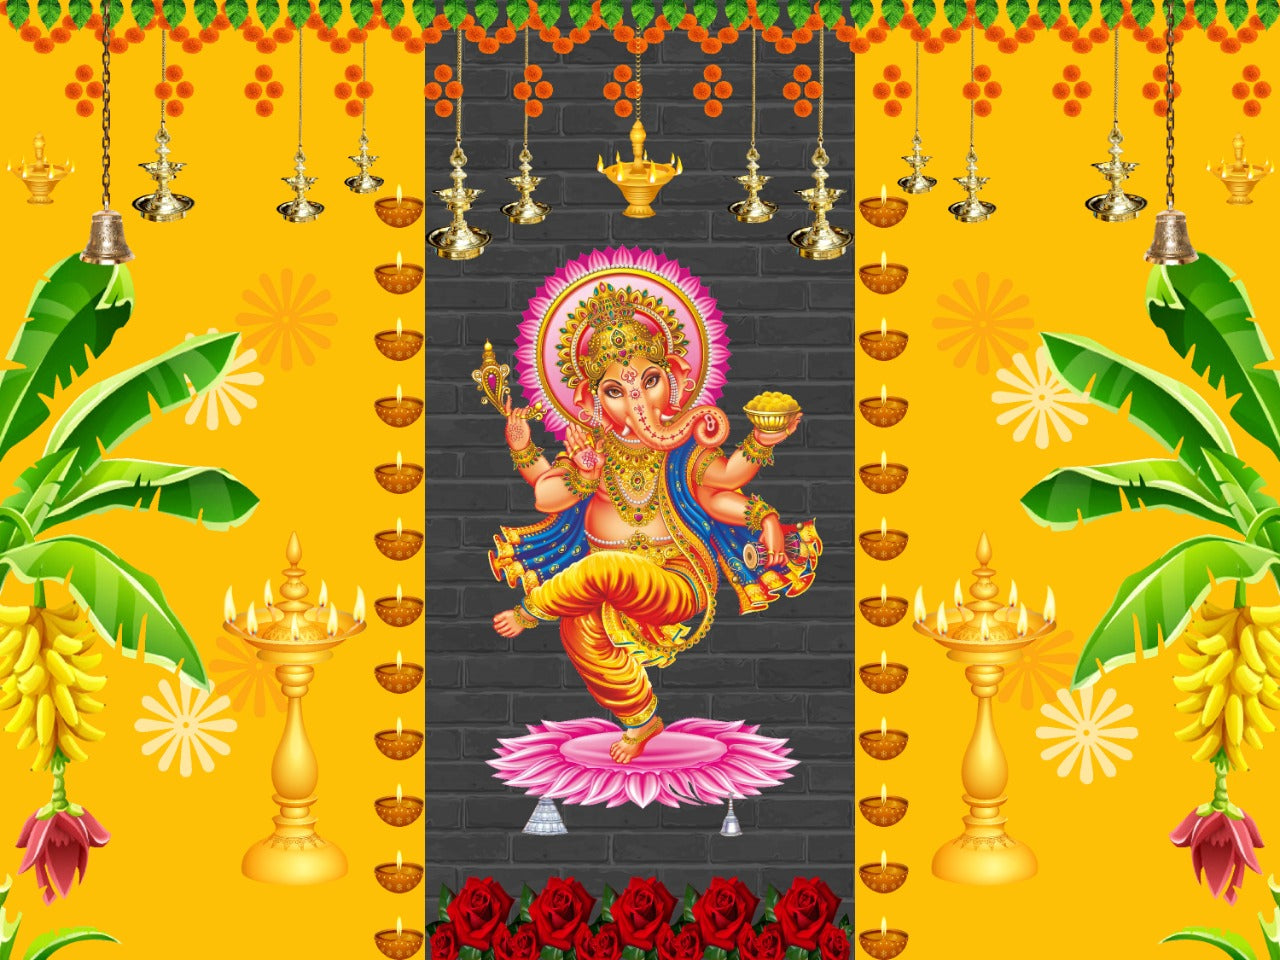 A classical Ganpati backdrop with motifs drawn like temples.